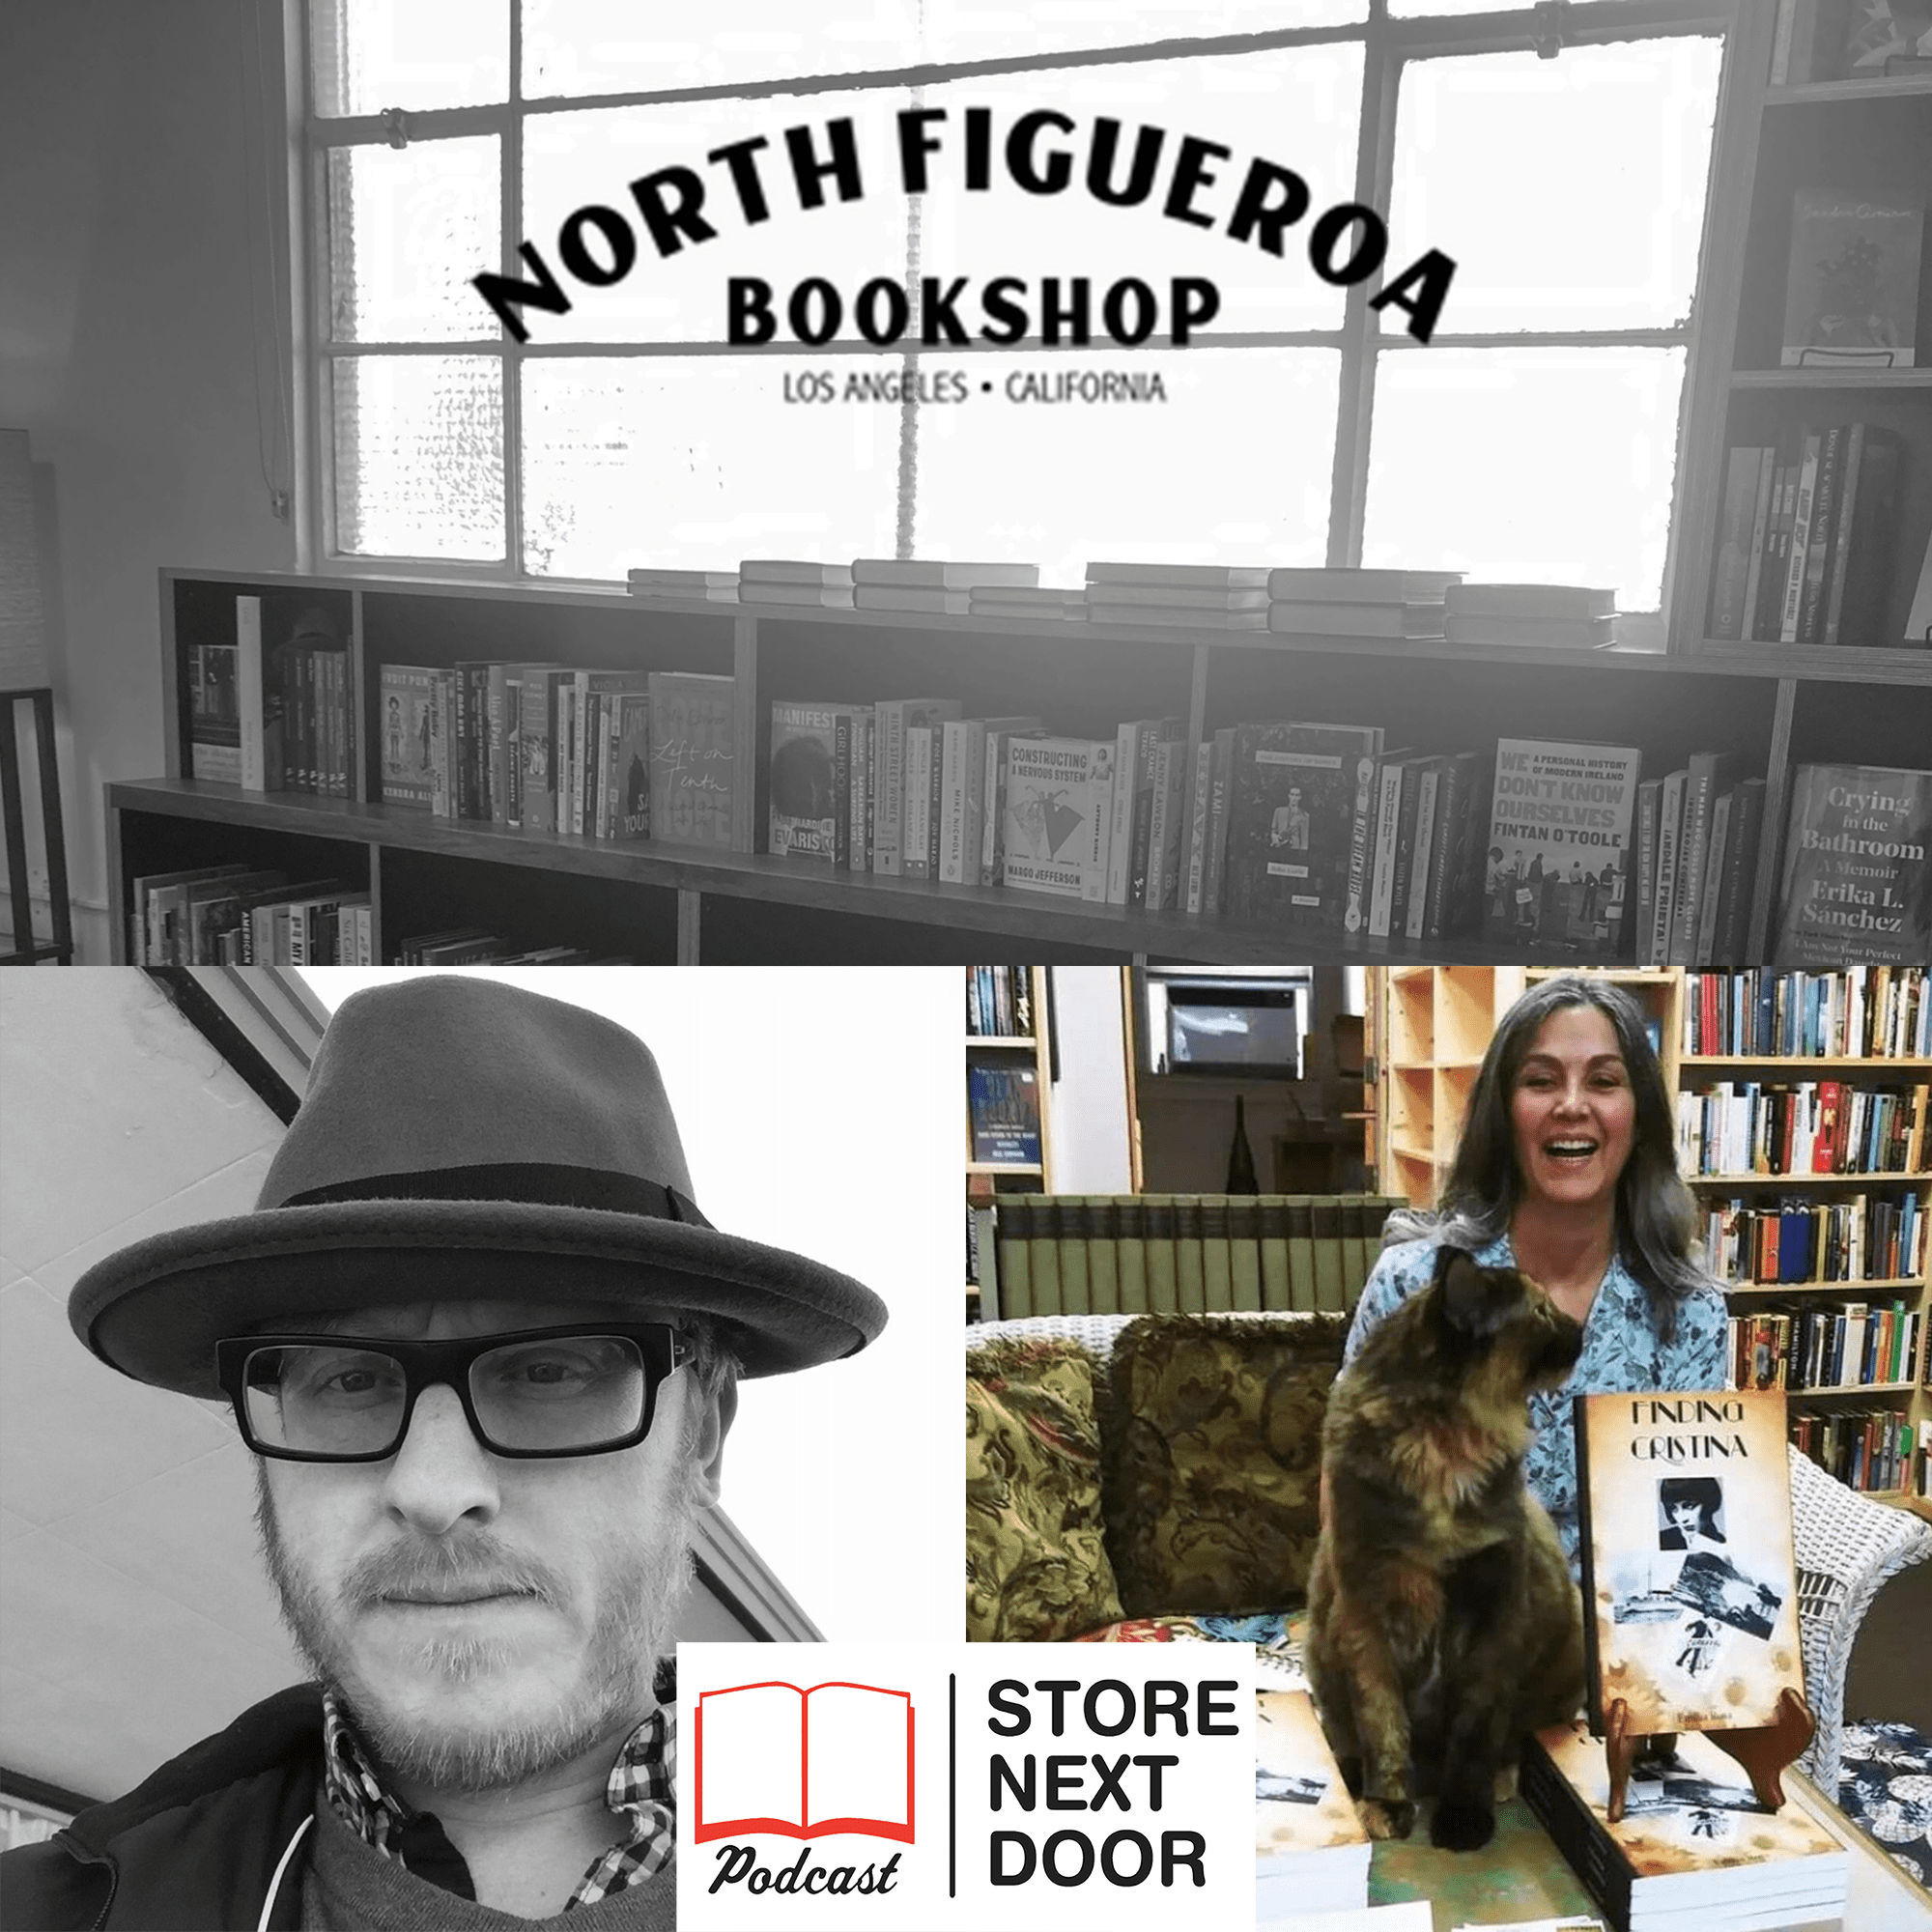 Store Next Door Season 2 Ep 1 North Figueroa Bookshop & Tyson Cornell